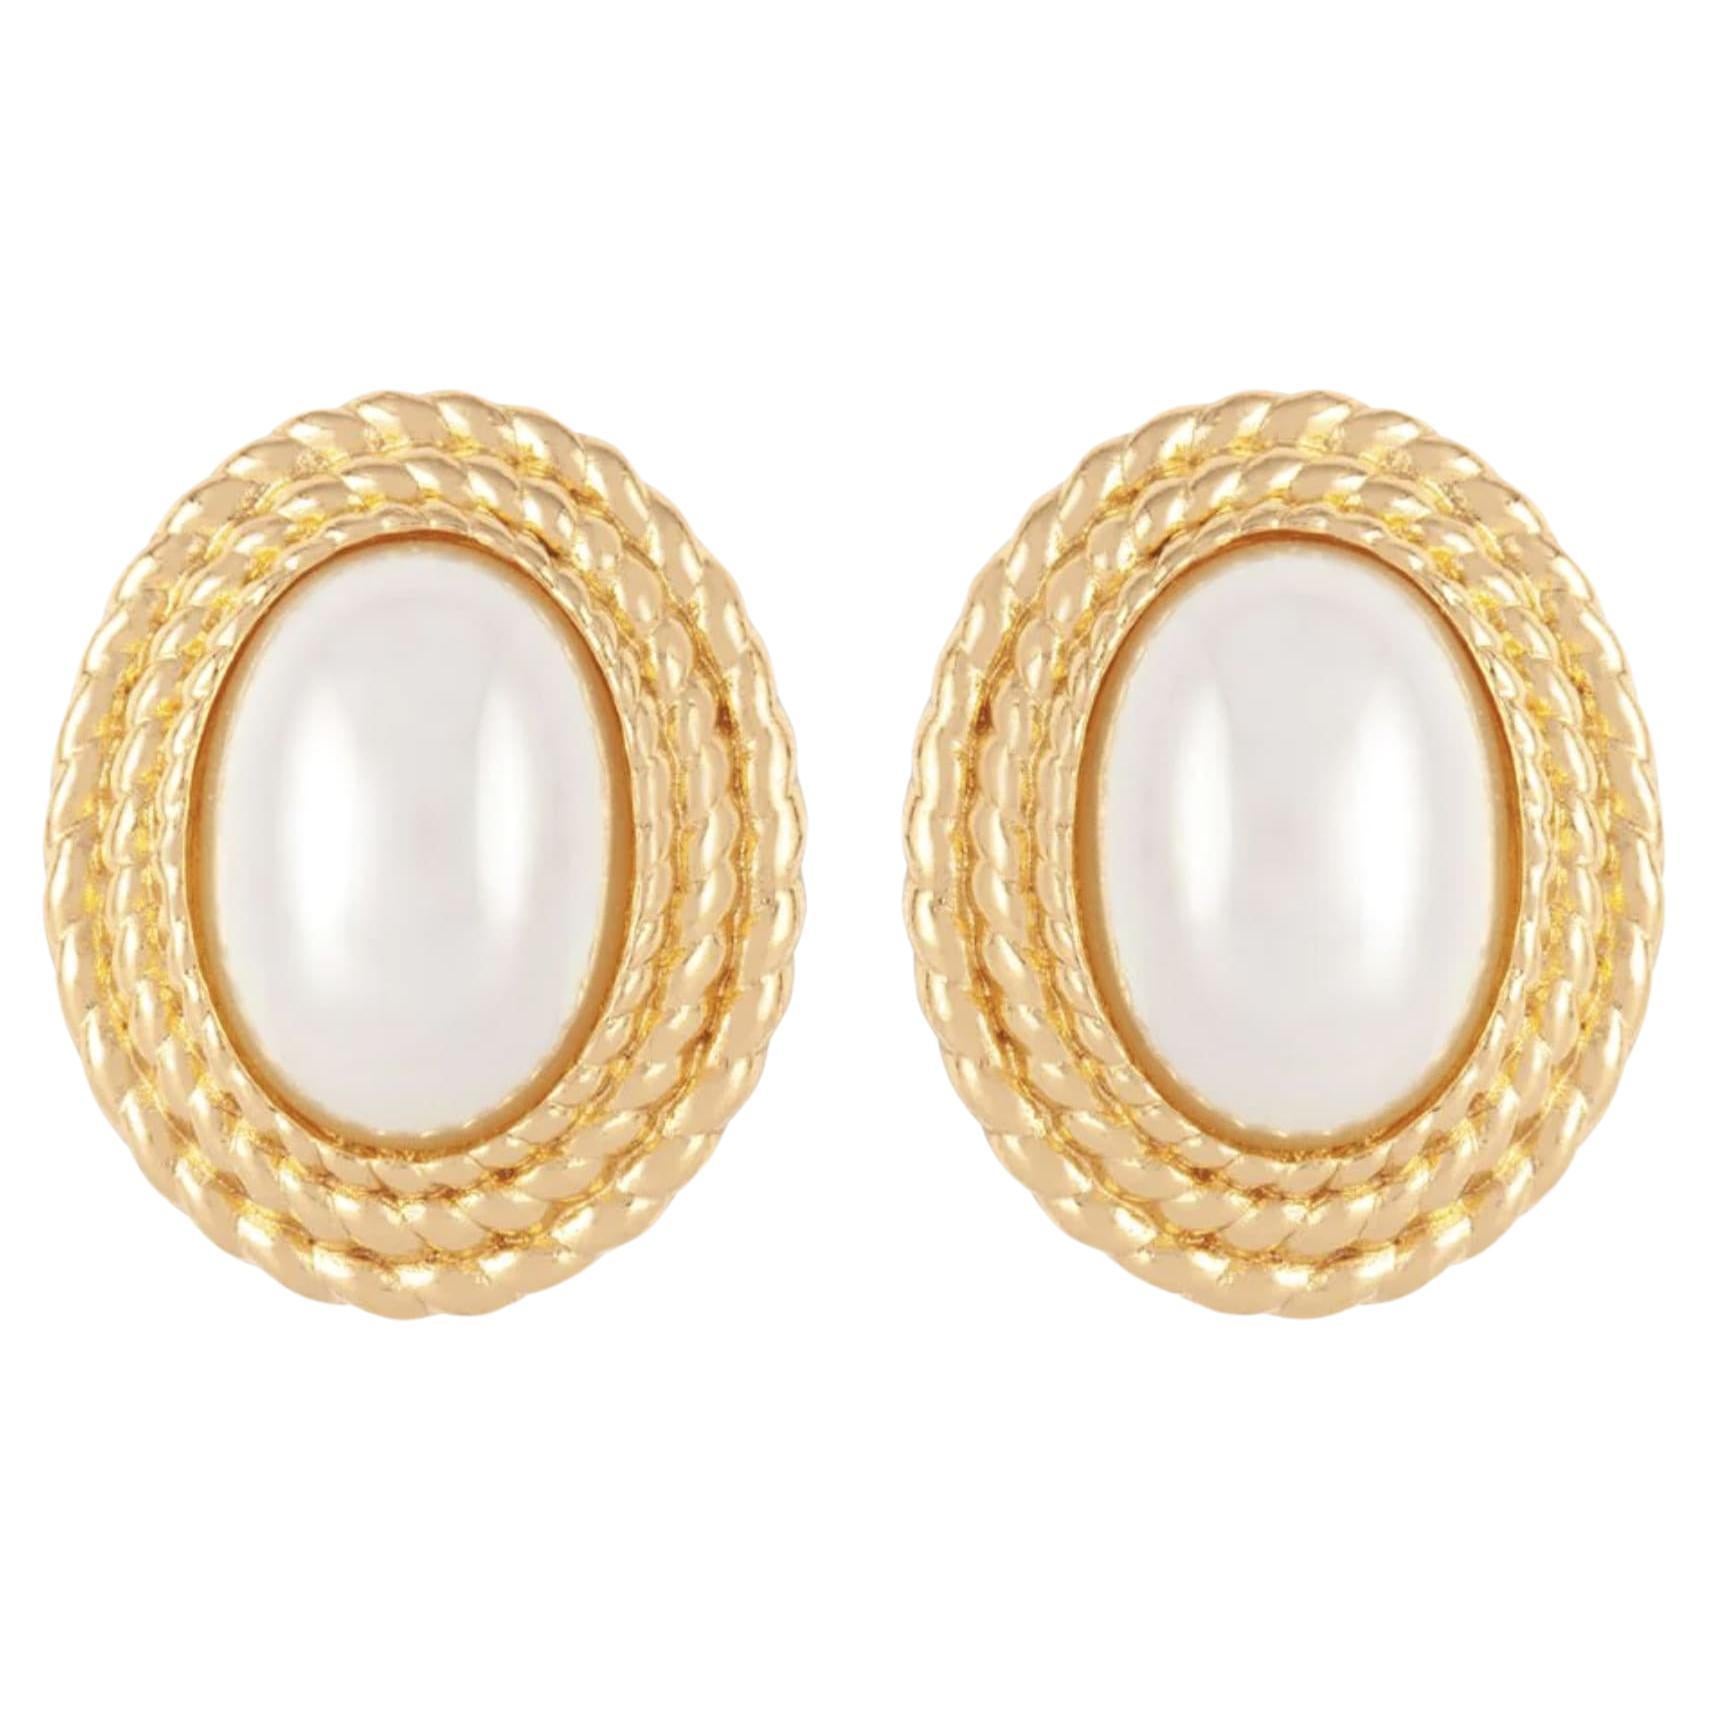 Christian Dior Vintage 1980s White Oval Pearl Triple Layer Swirl Braid Earrings